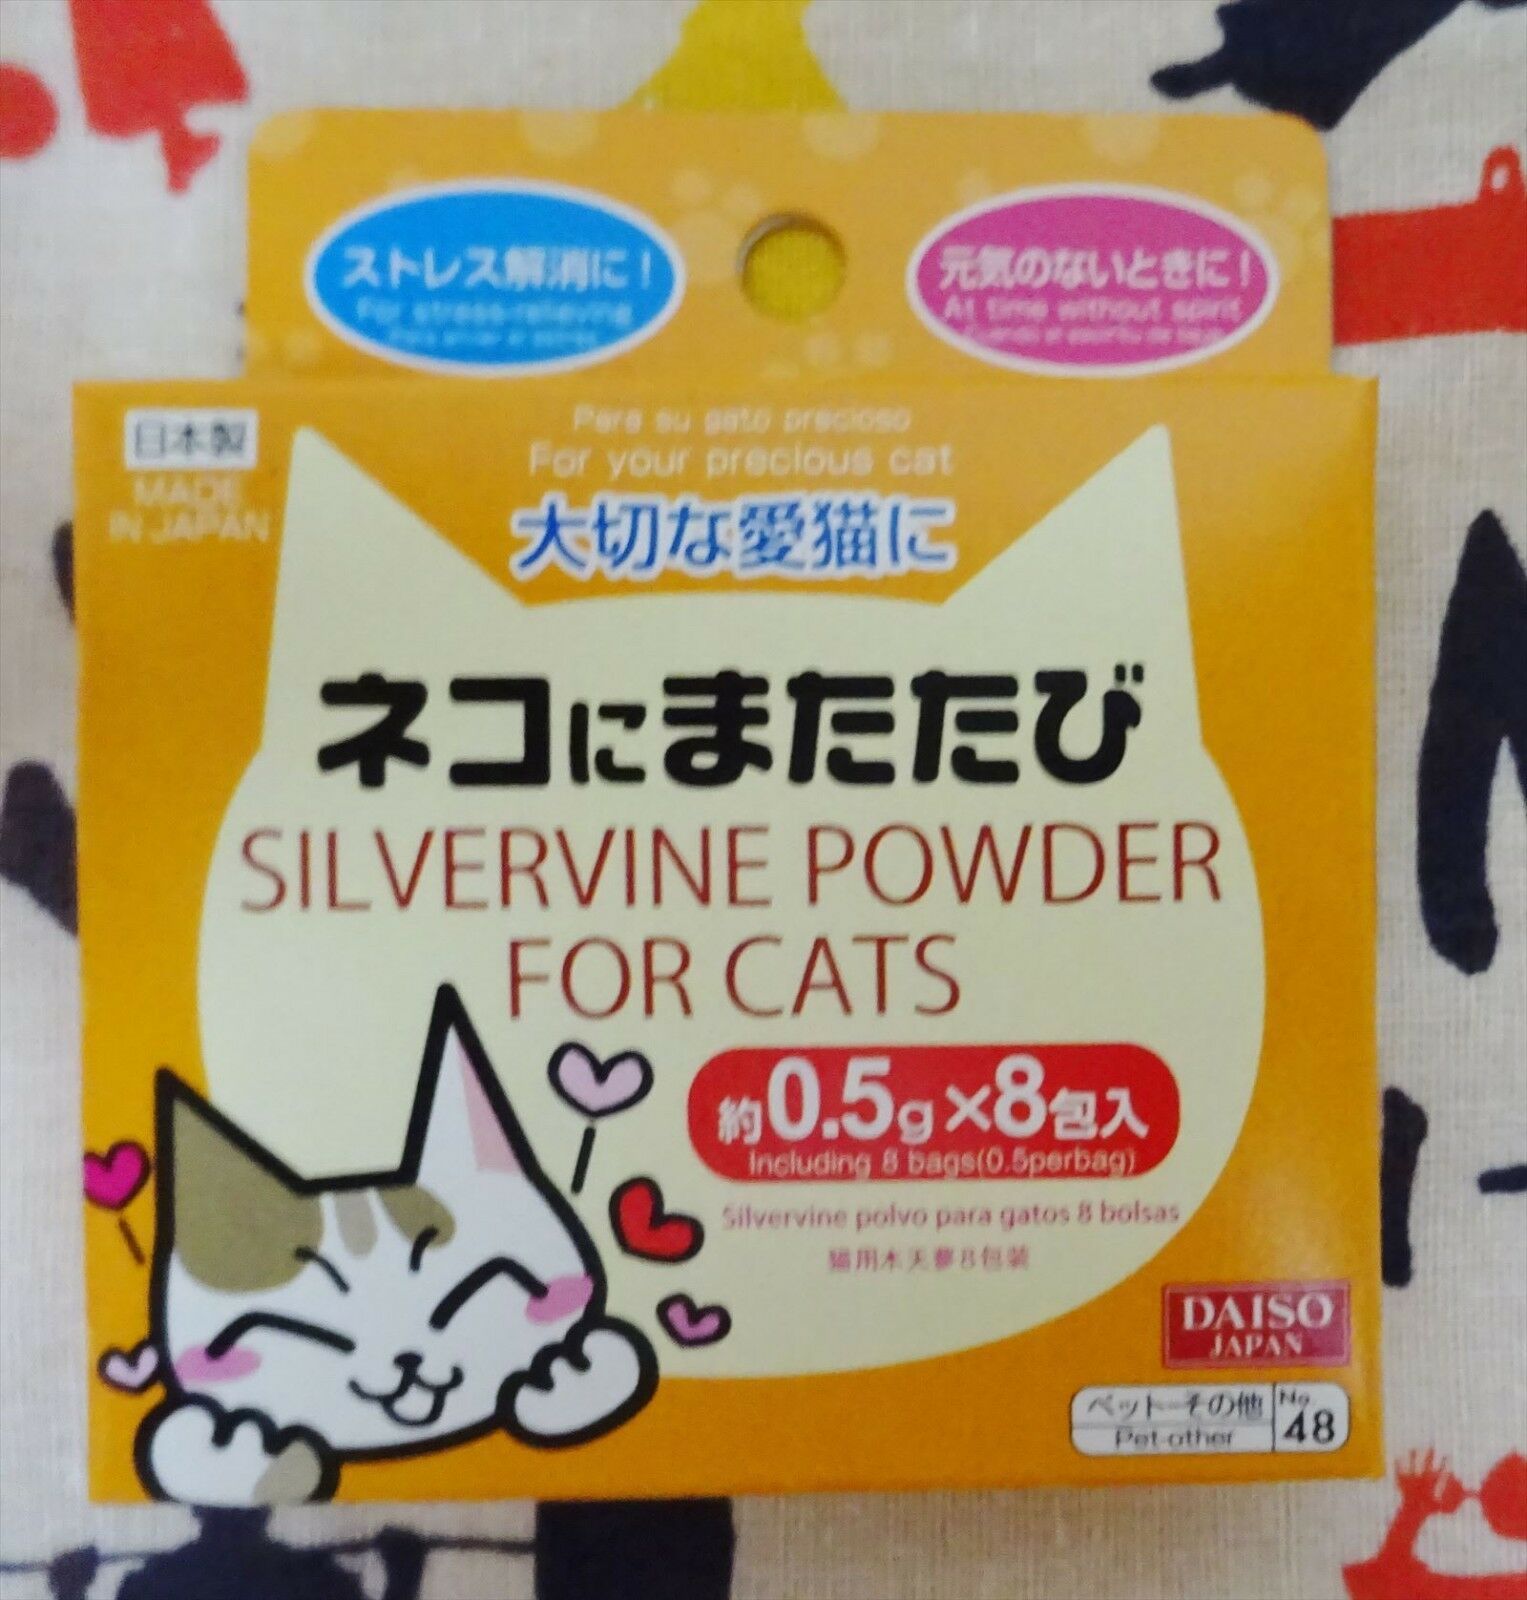 Silvervine Powder For Cats Matatabi 0.5 G×8 Packs